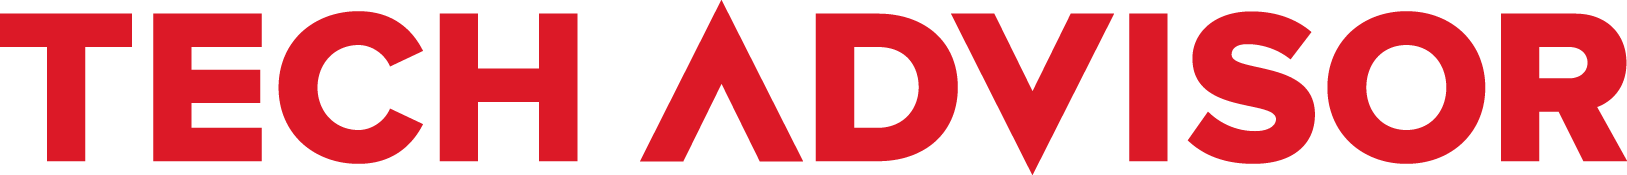 tech advisor logo